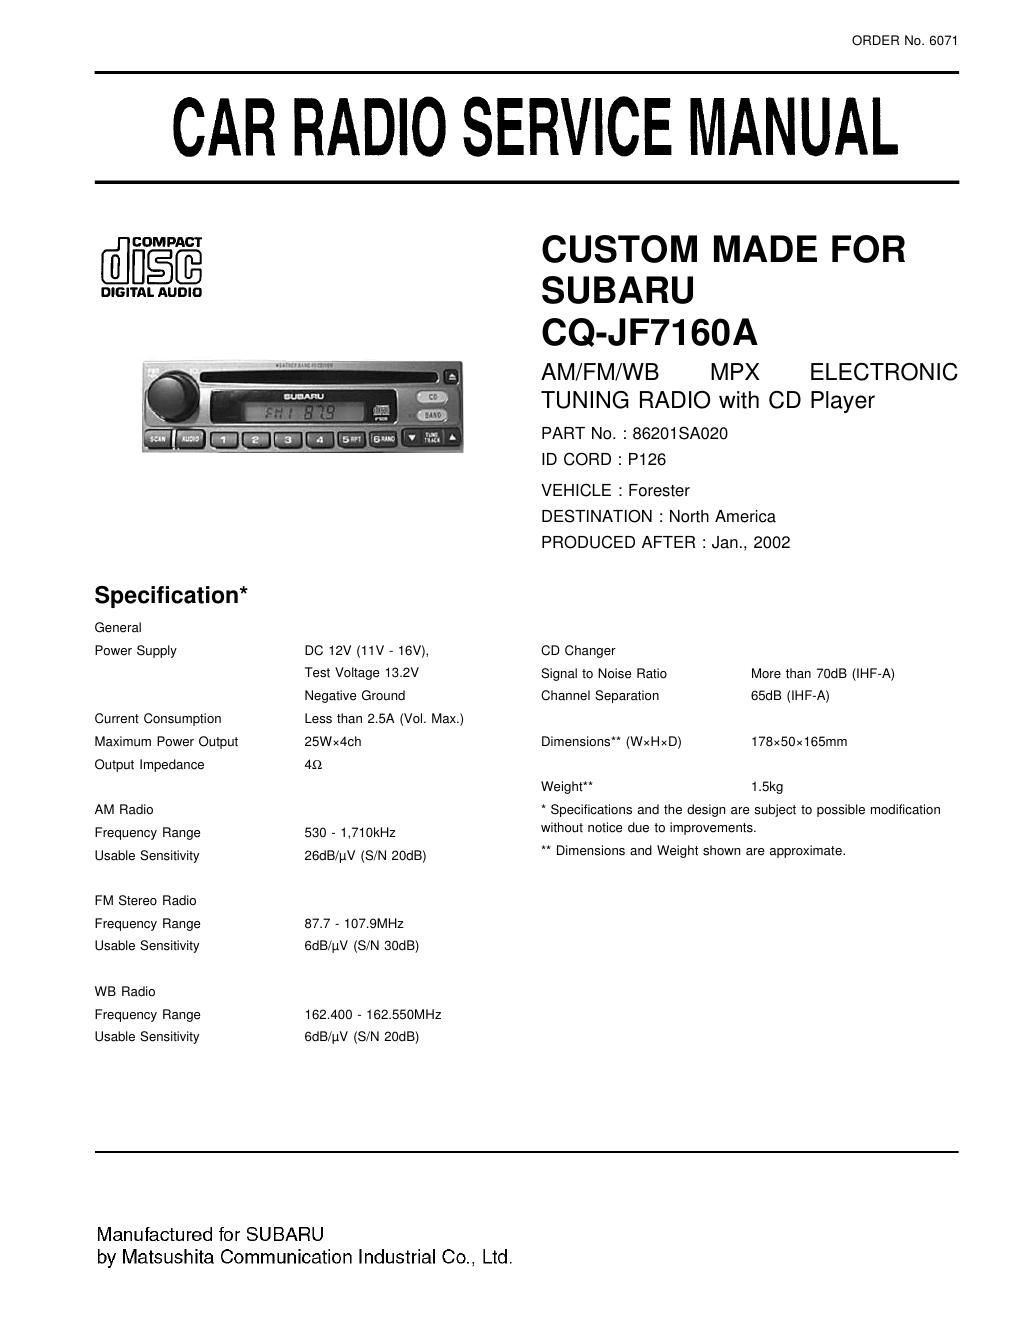 panasonic cq jf 7160 a service manual